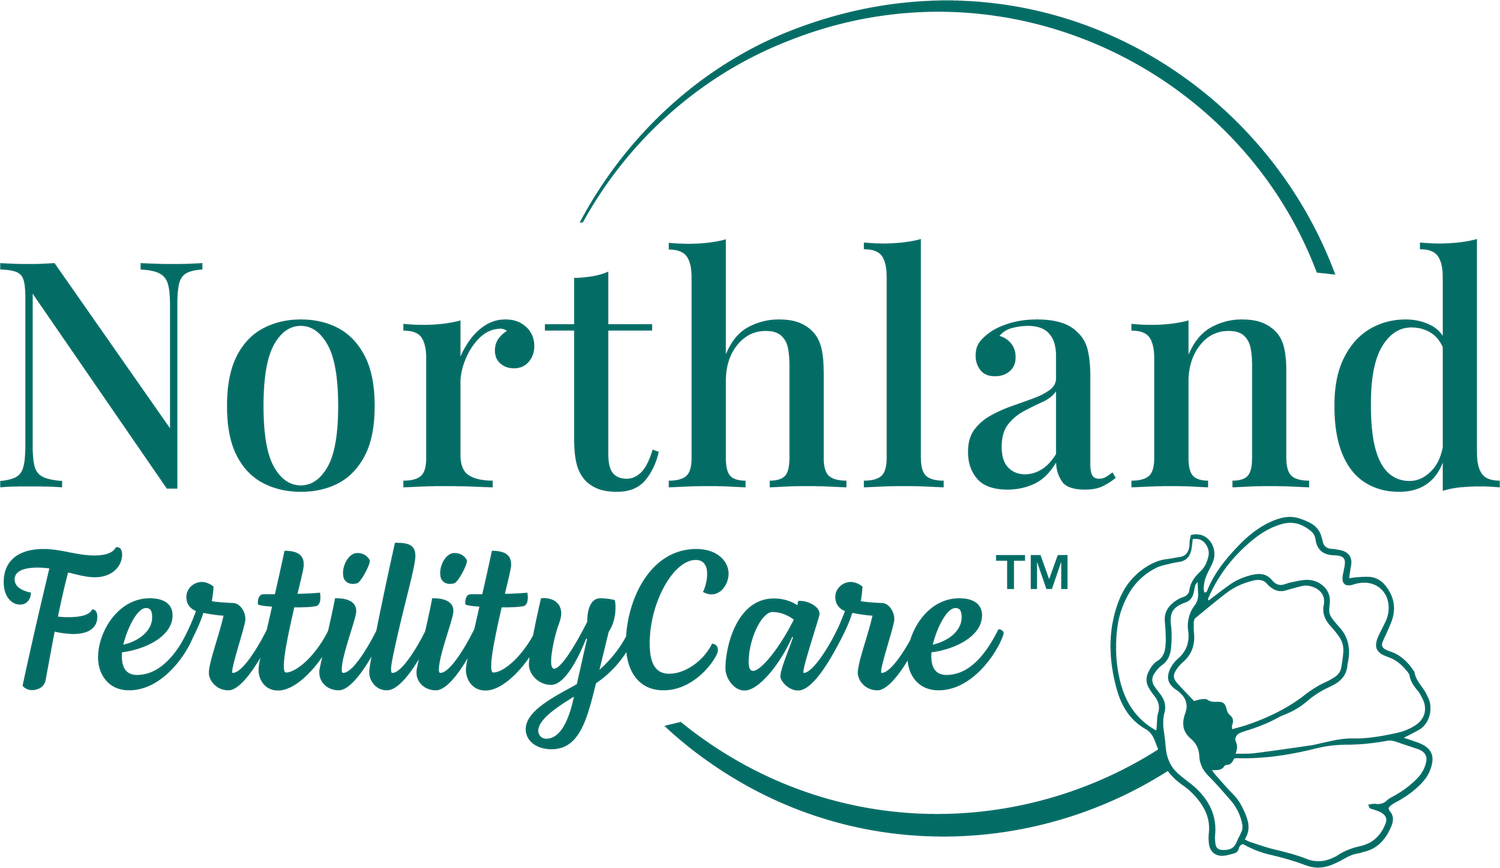 Northland FertilityCare